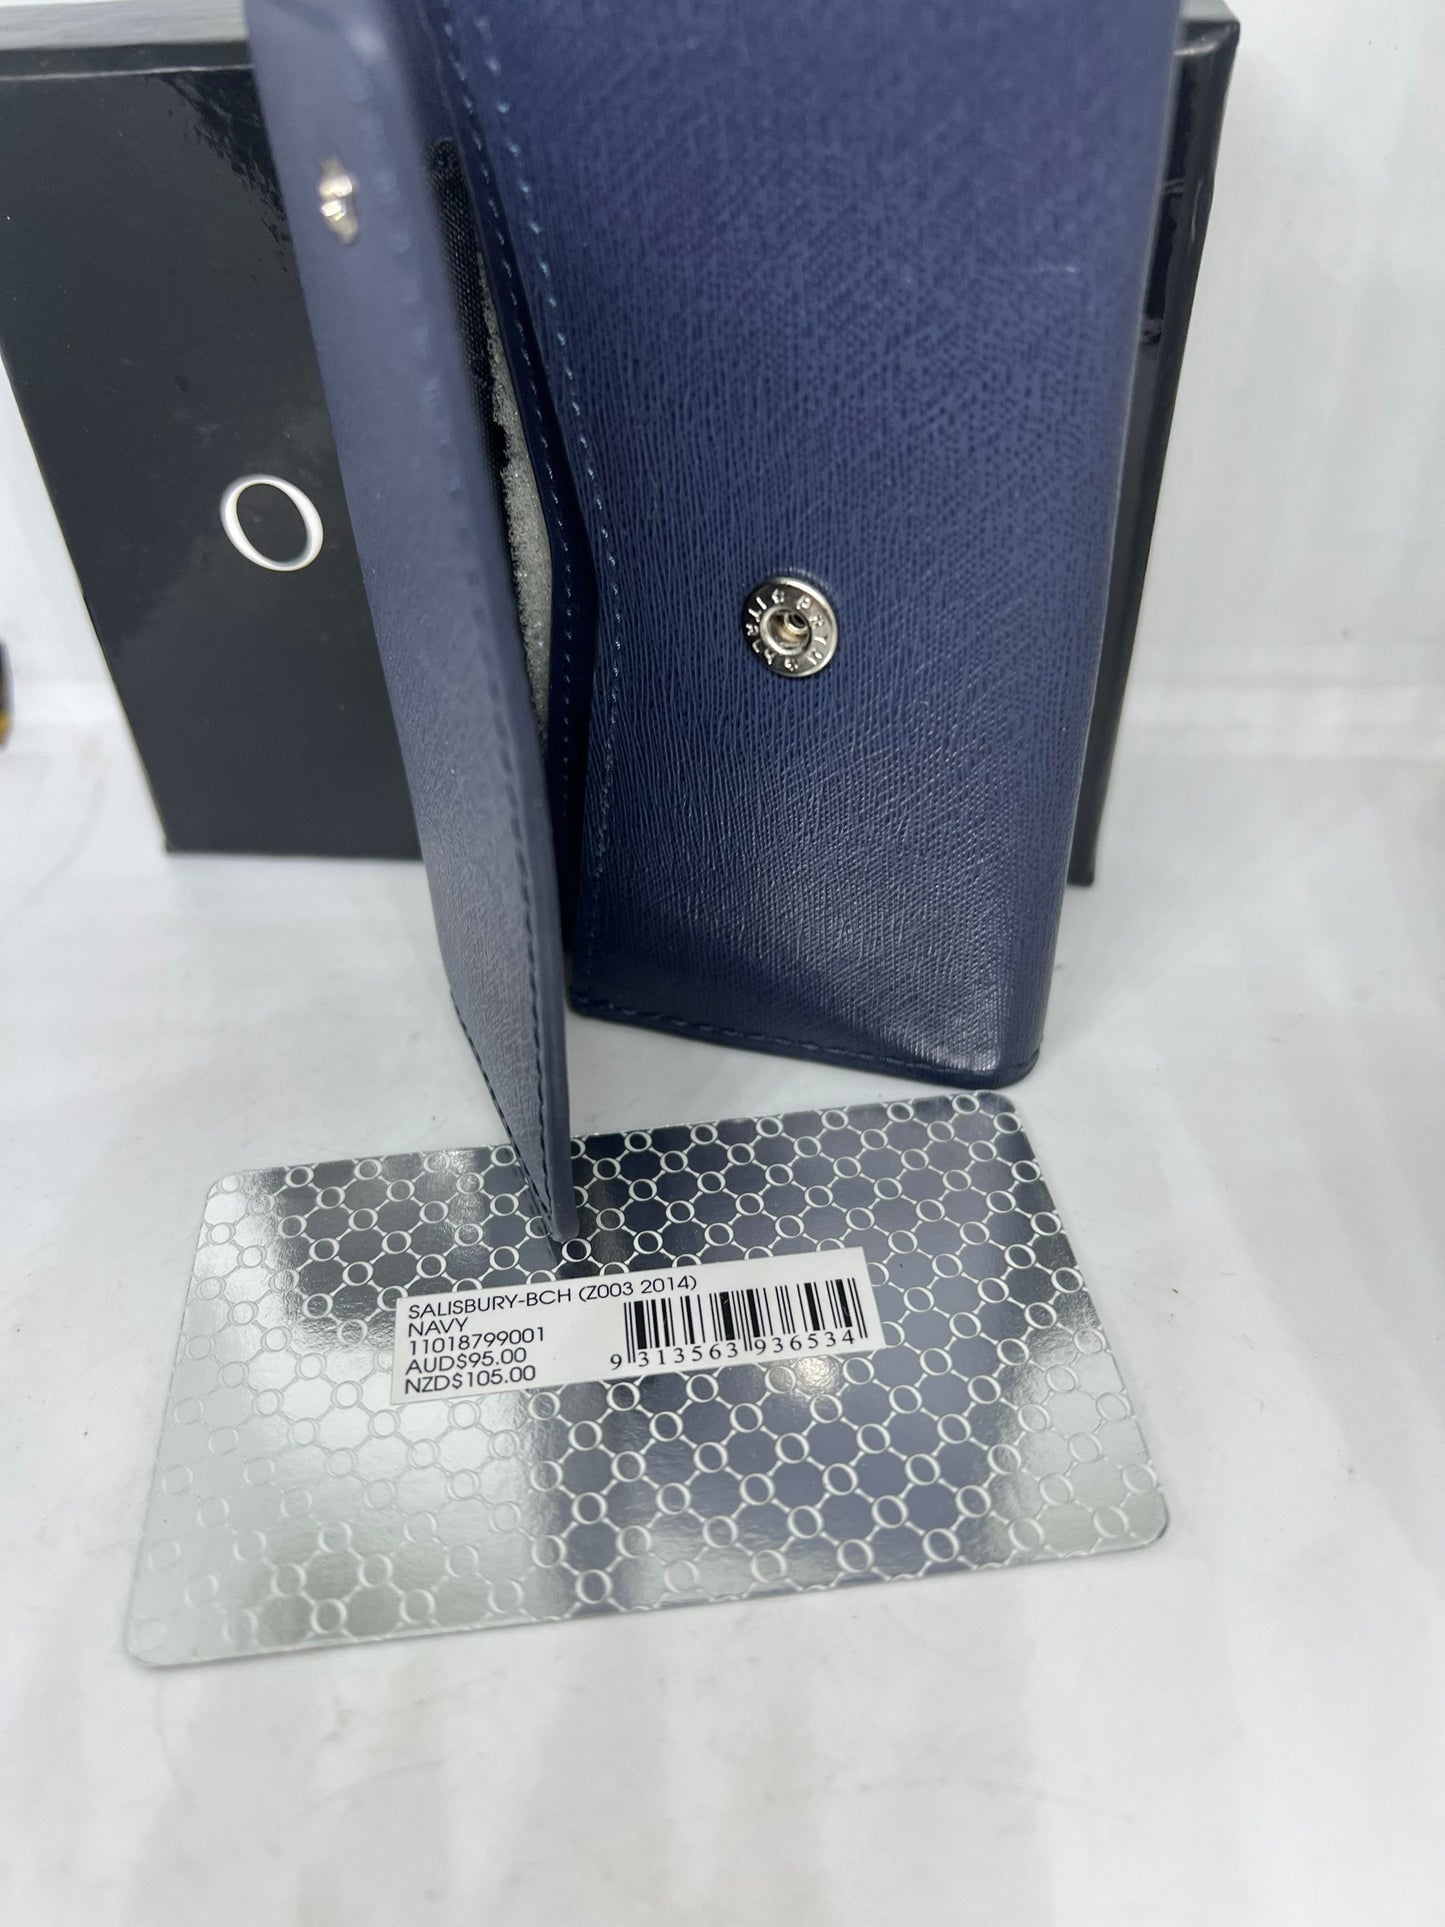 New Oroton key bag blue11x7cm